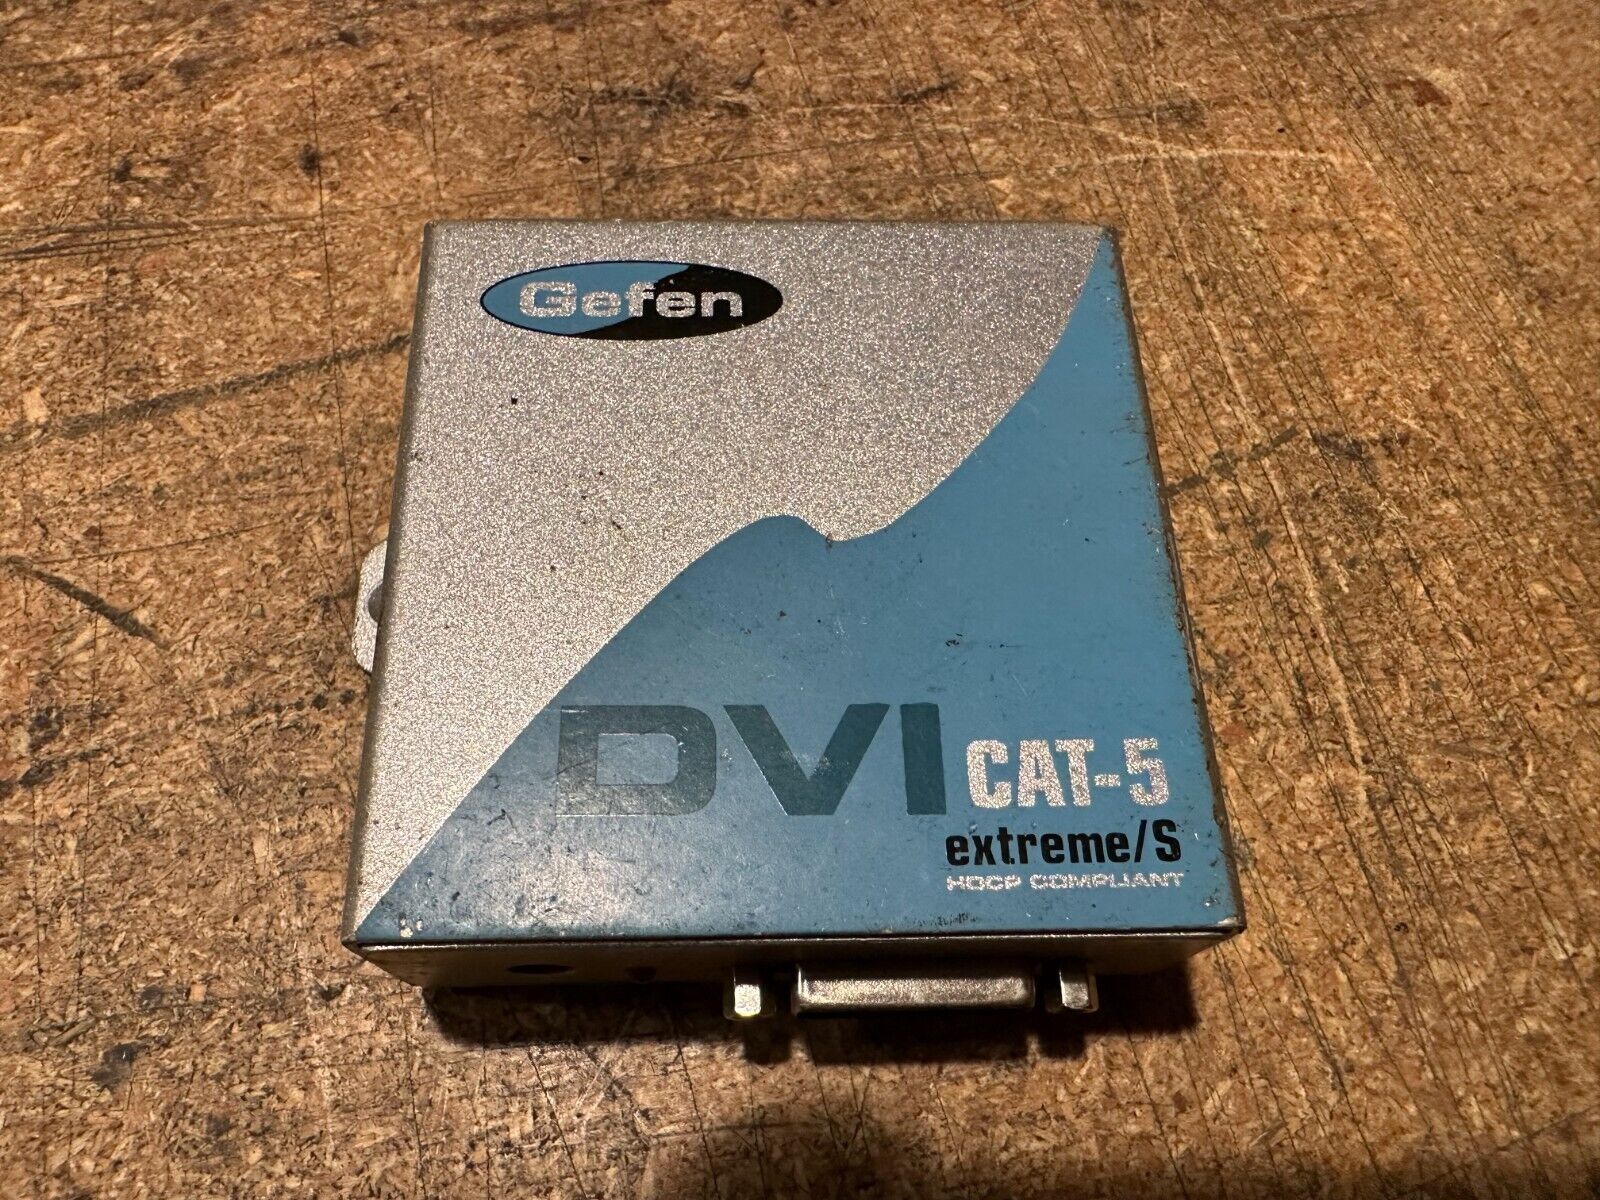 Gefen DVI CAT-5 extreme/s HDCP Compliant CAT-5 Extender